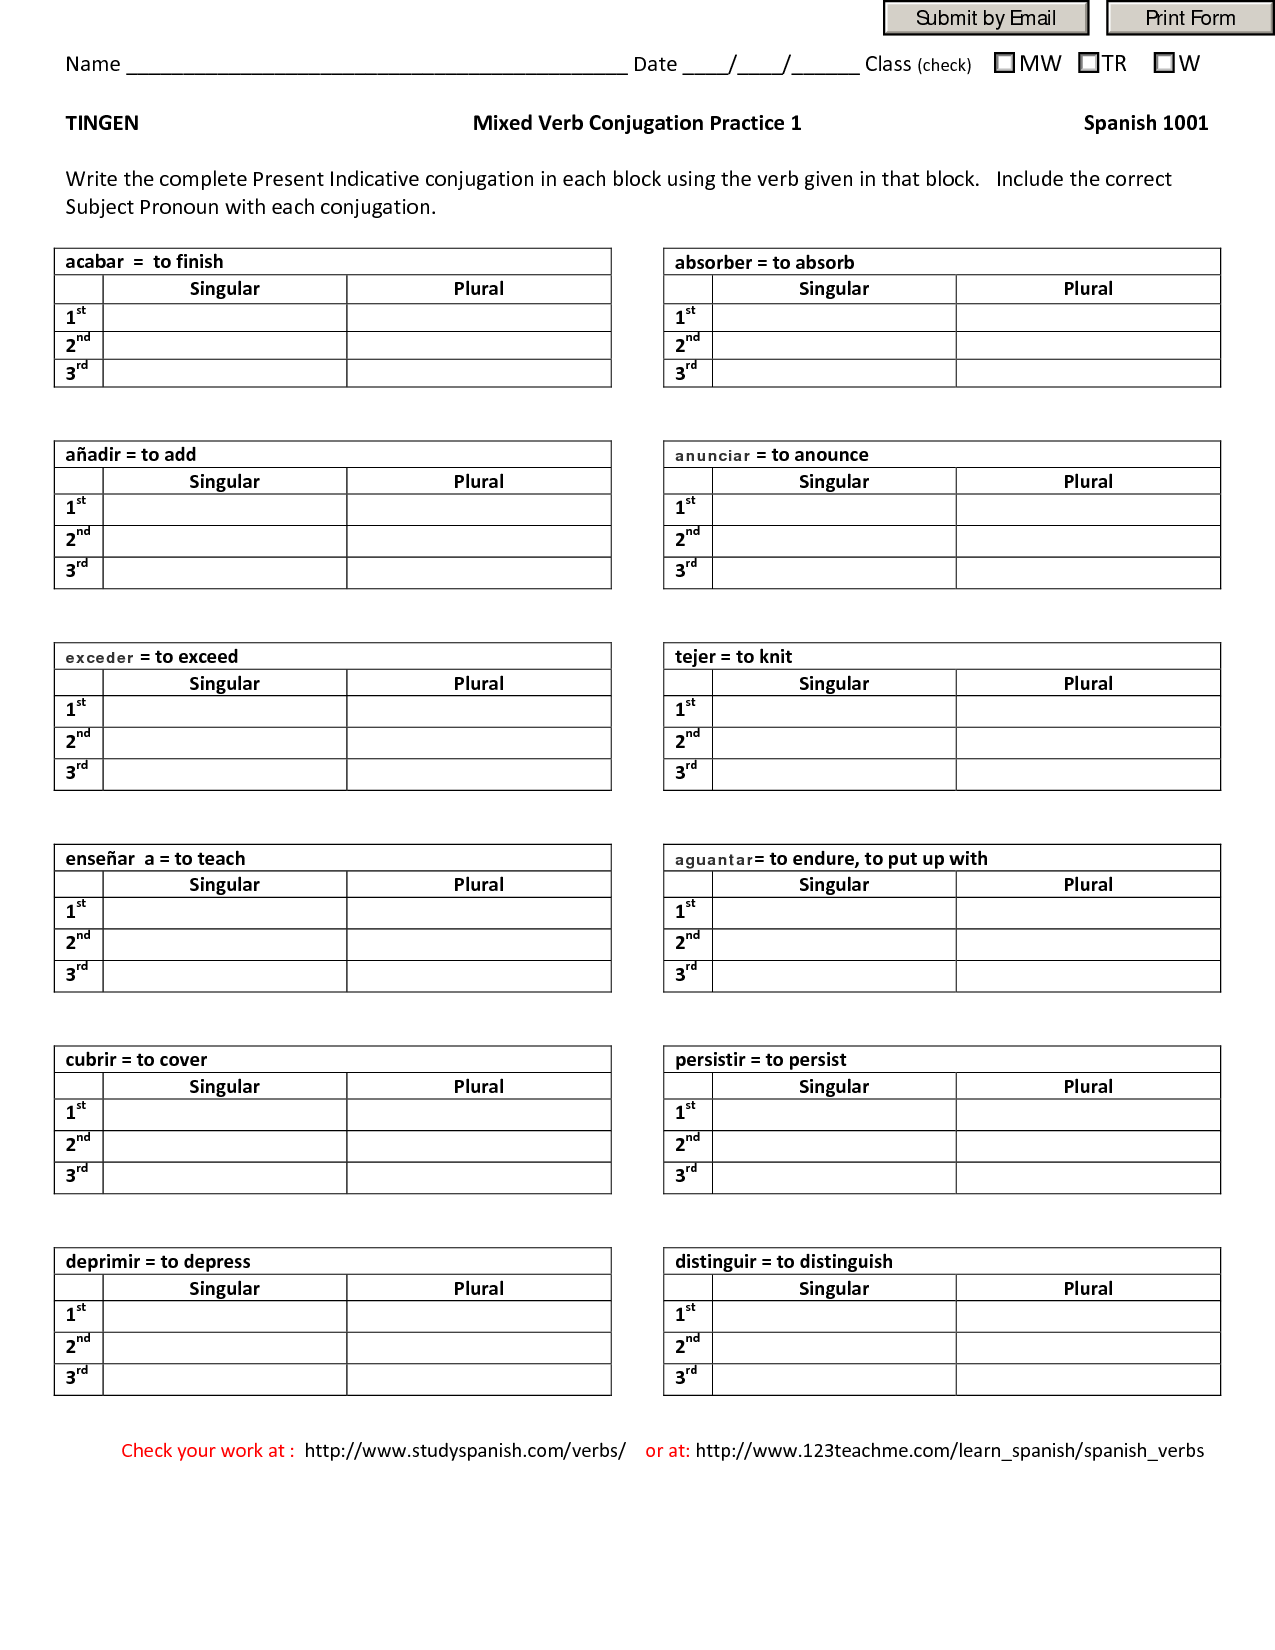 beginner-spanish-verb-conjugation-practice-worksheets